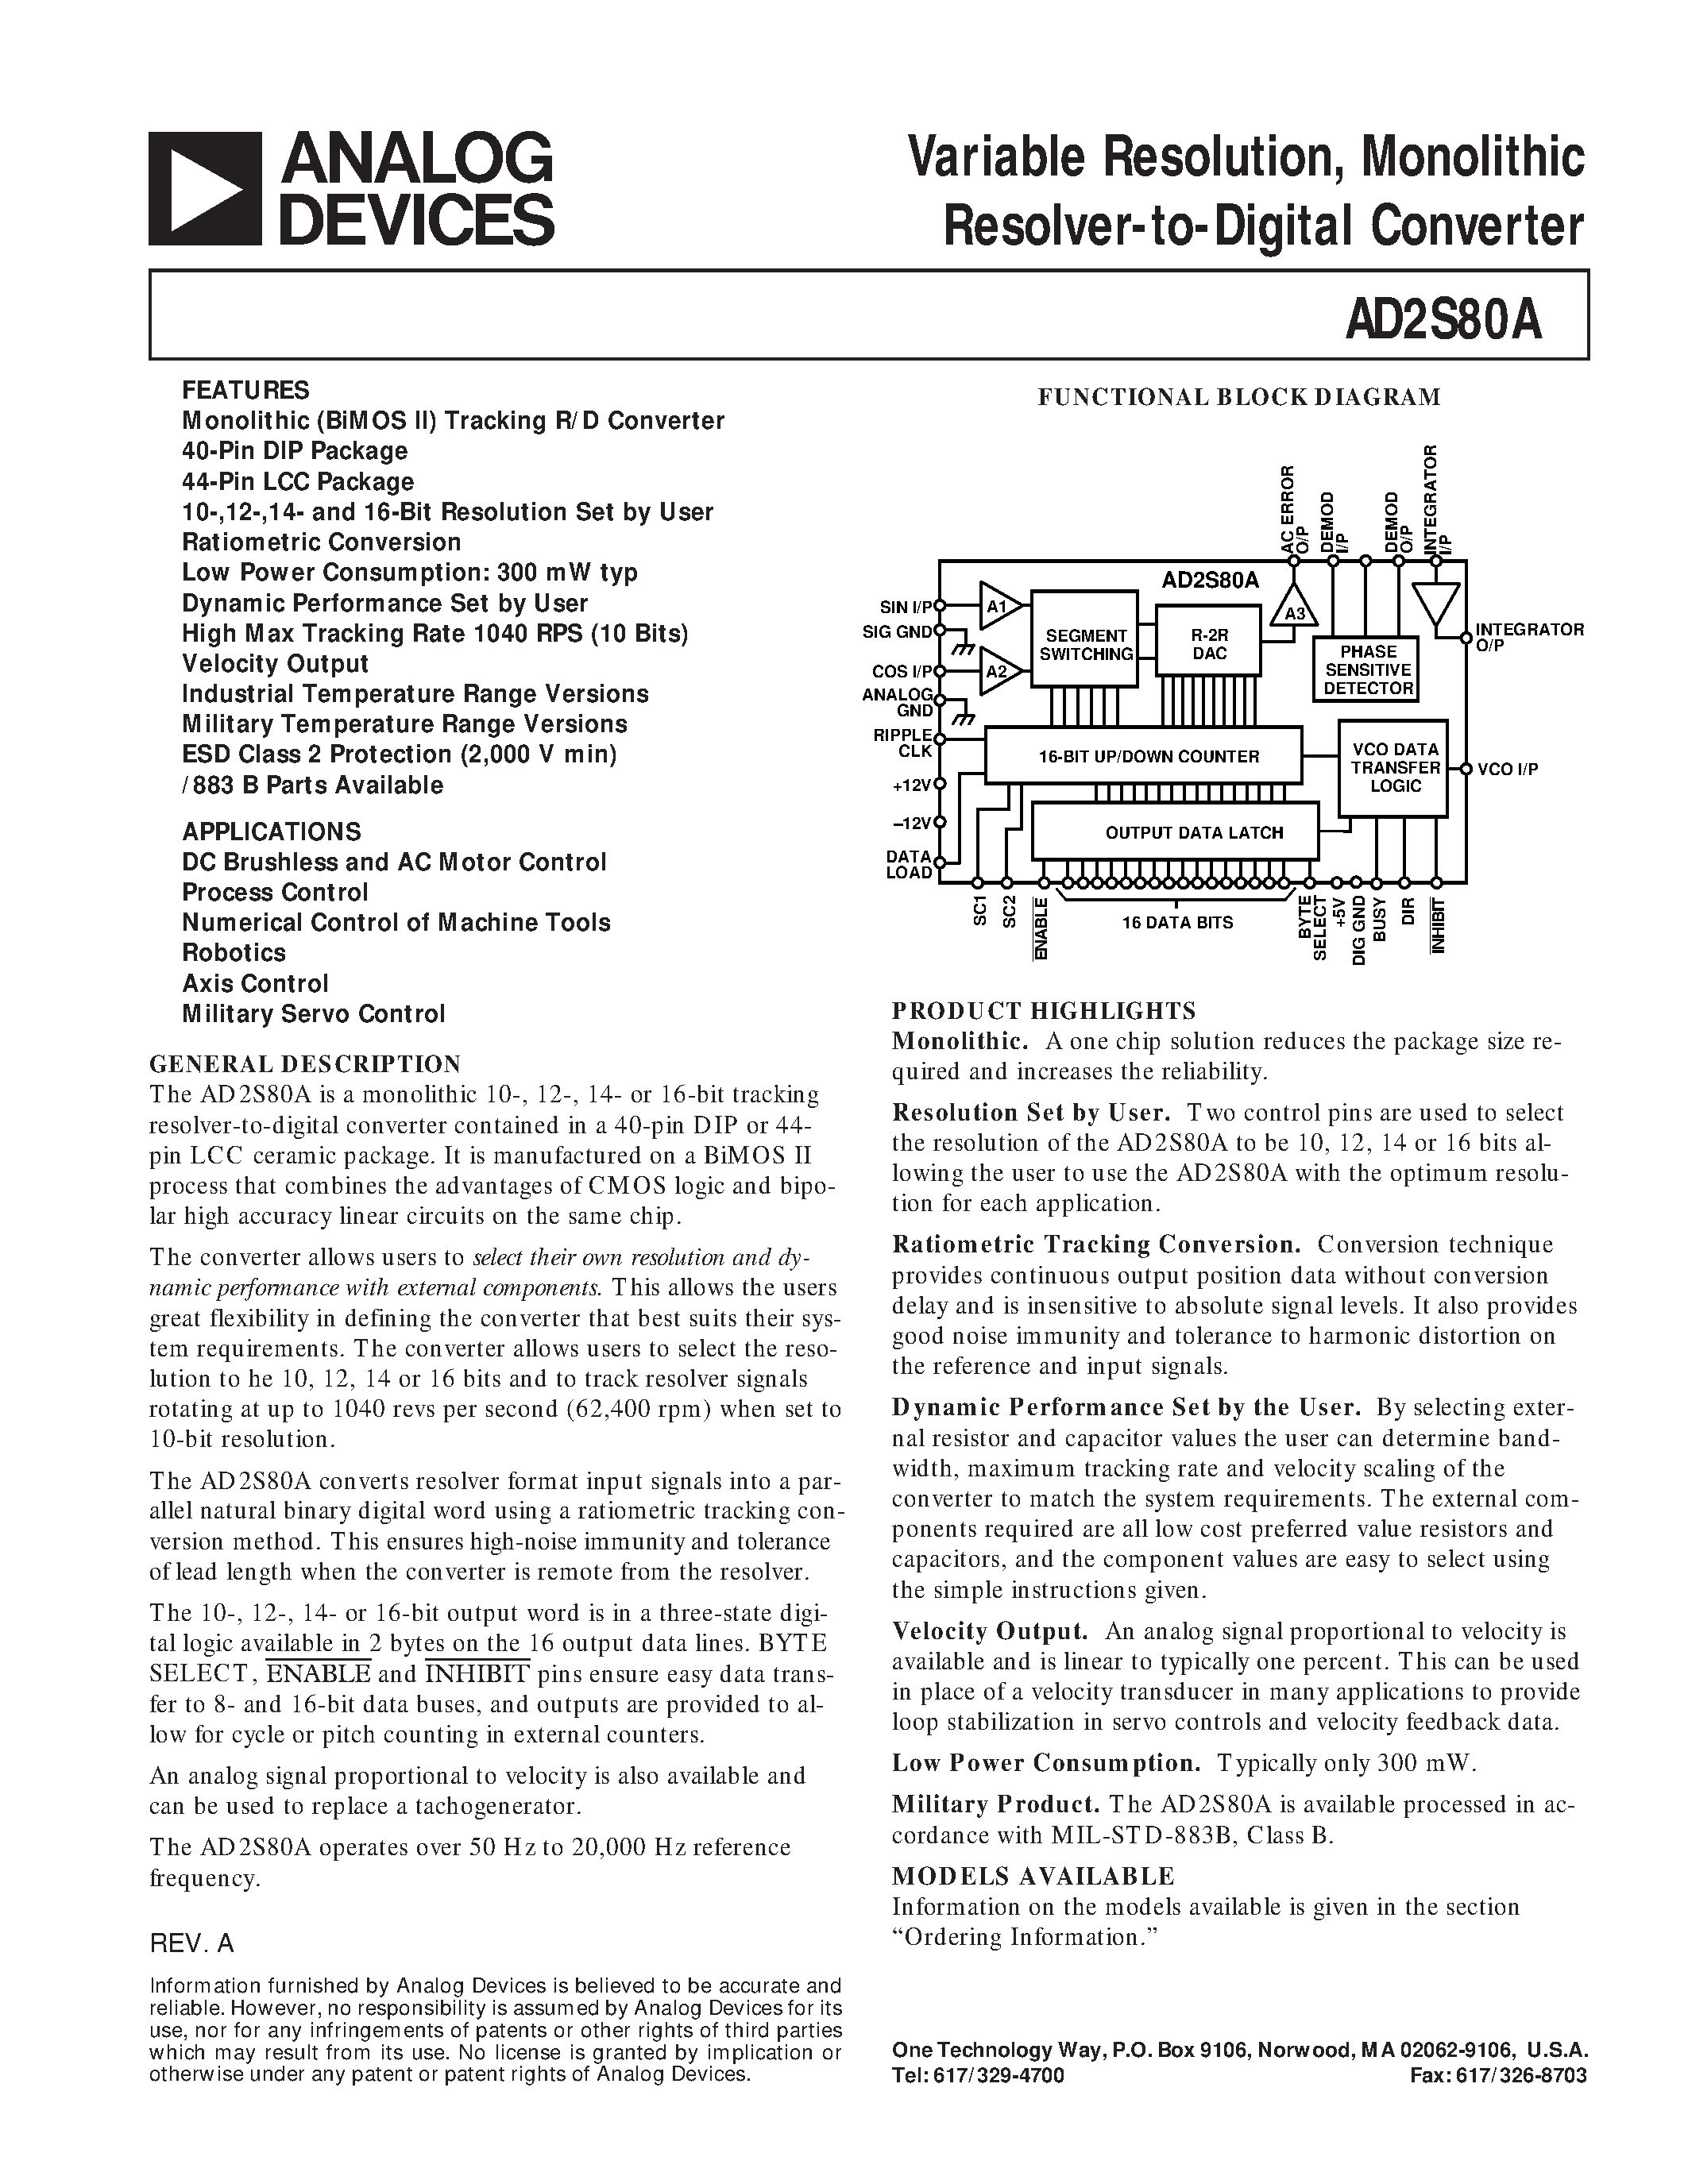 Даташит AD2S80ASD/883B - Variable Resolution/ Monolithic Resolver-to-Digital Converter страница 1